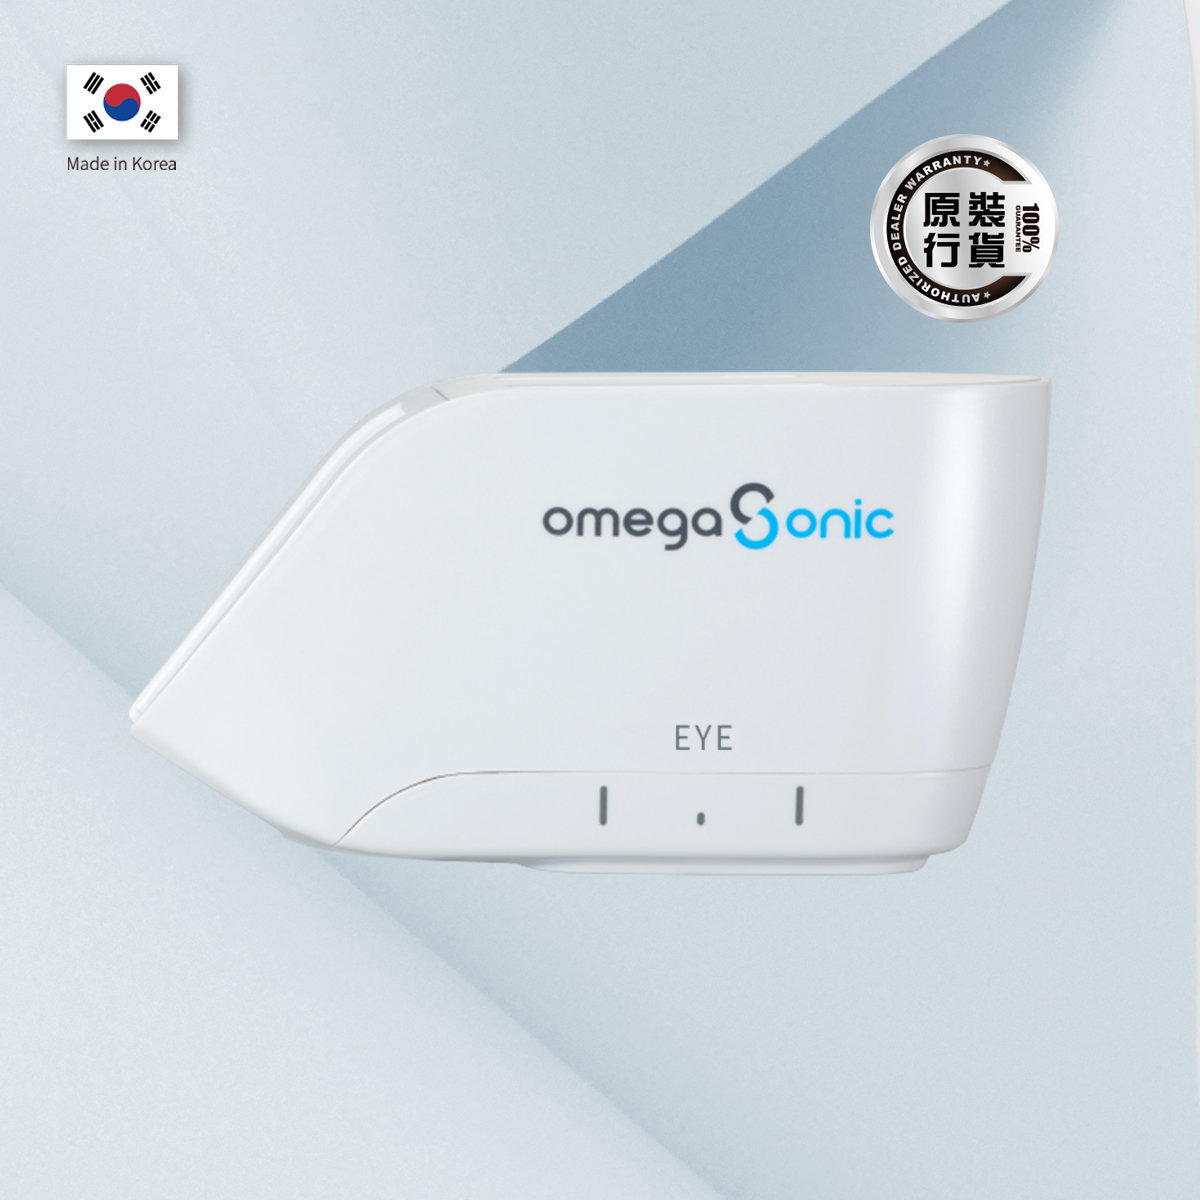 Omega Sonic HIFU家用塑顏儀 - 眼部機頭  2.0 mm